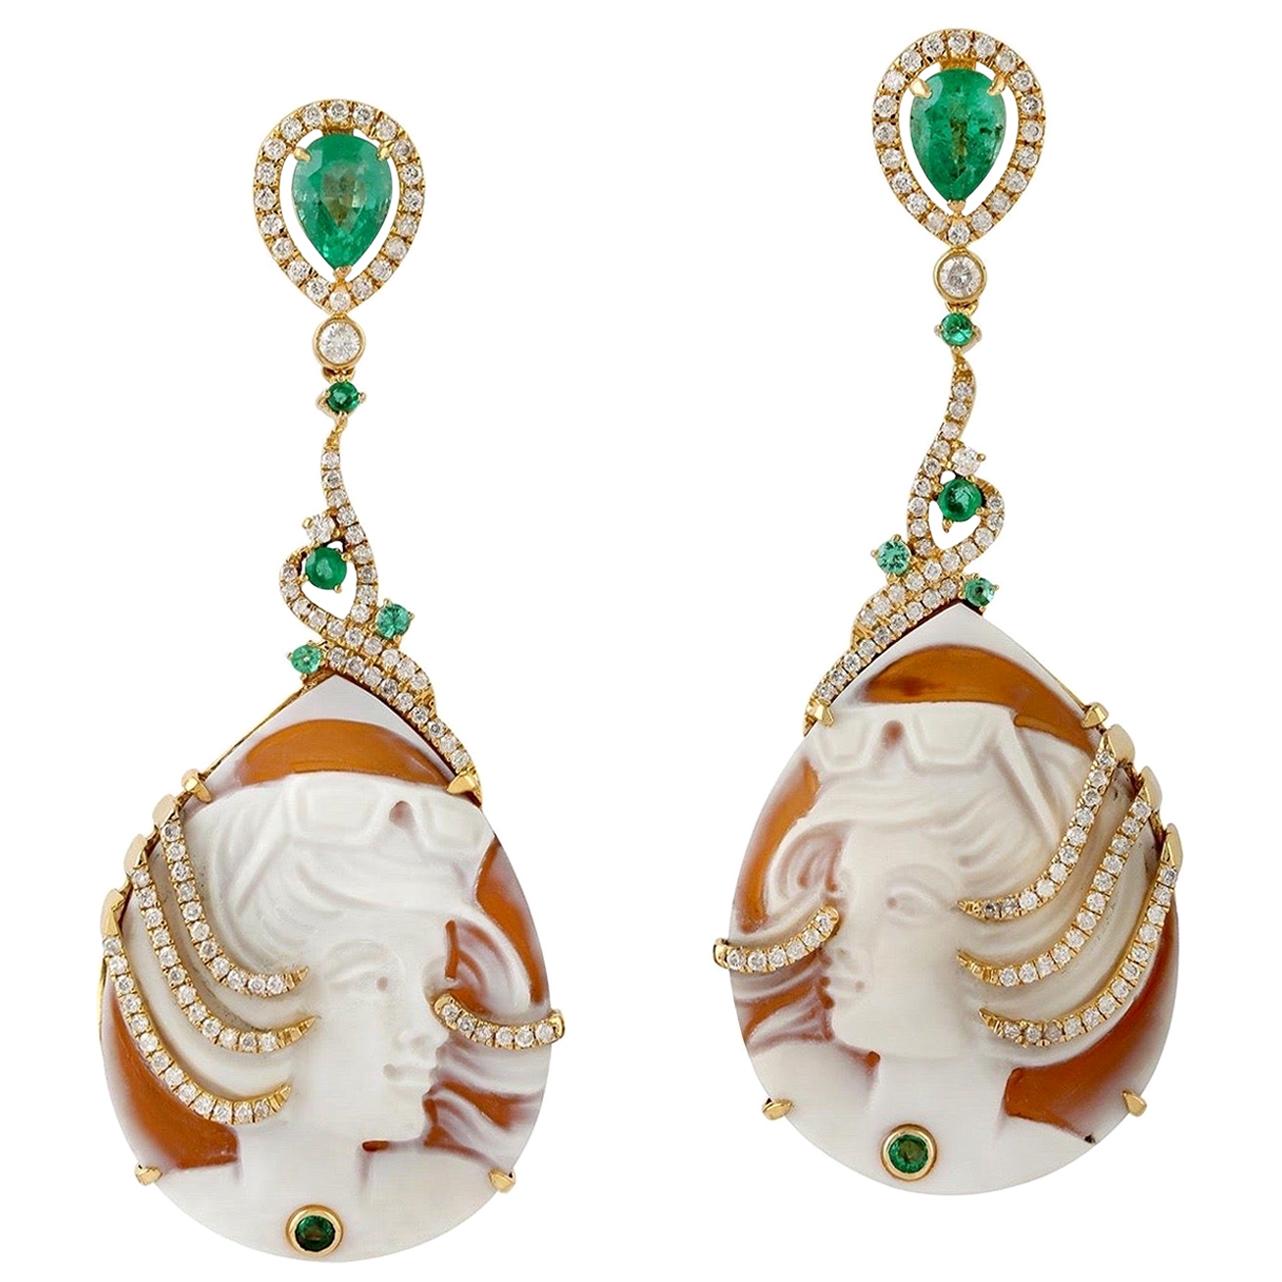 Cameo-Ohrringe mit Smaragd und Diamant aus 18 Karat Gold